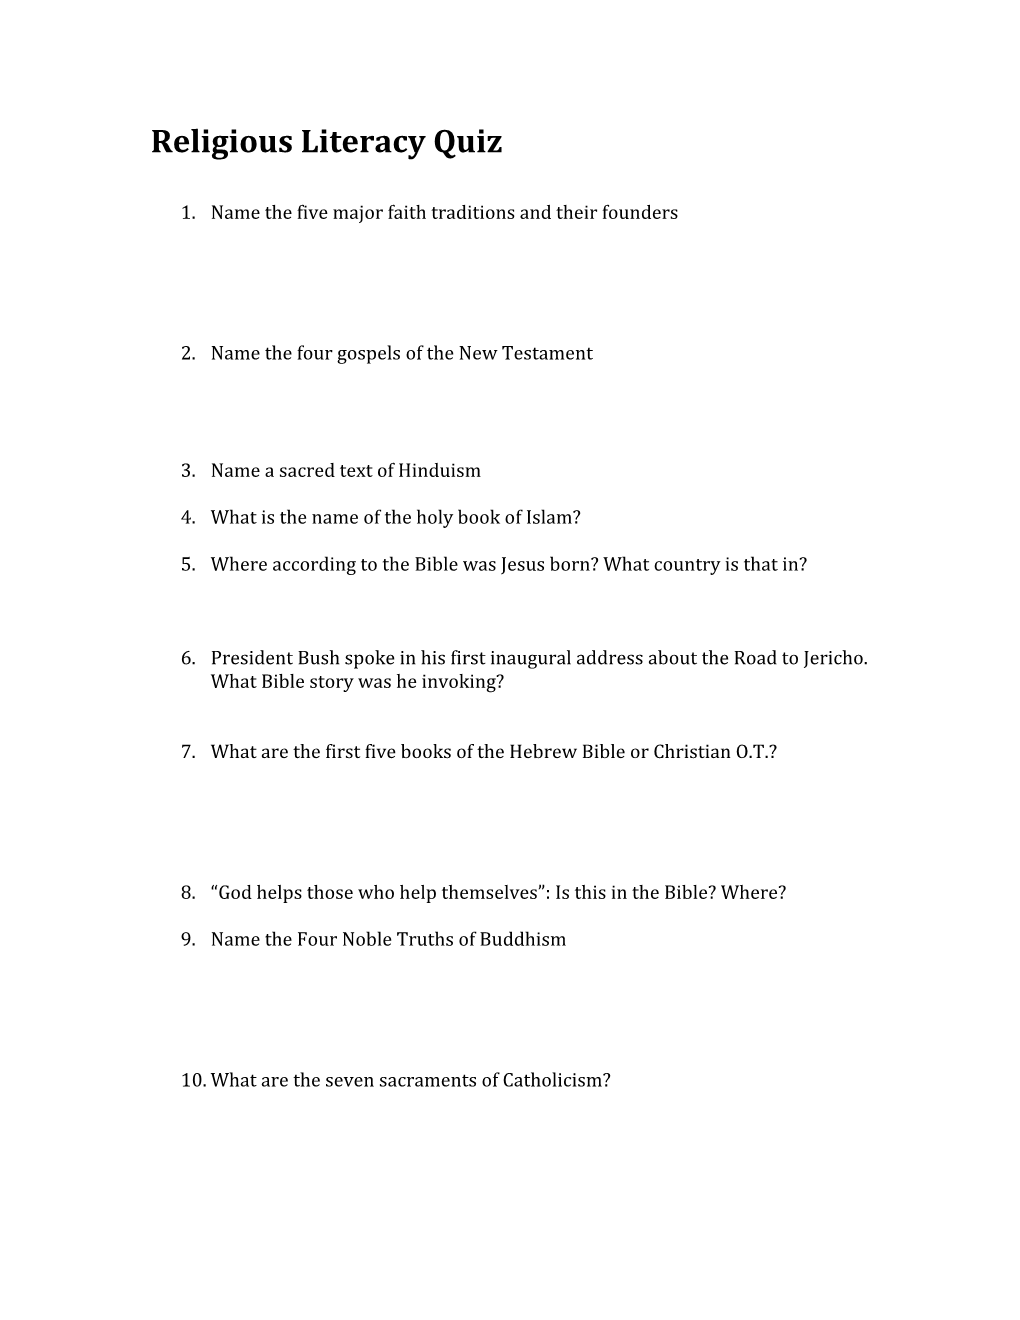 Religious Literacy Quiz/Answers